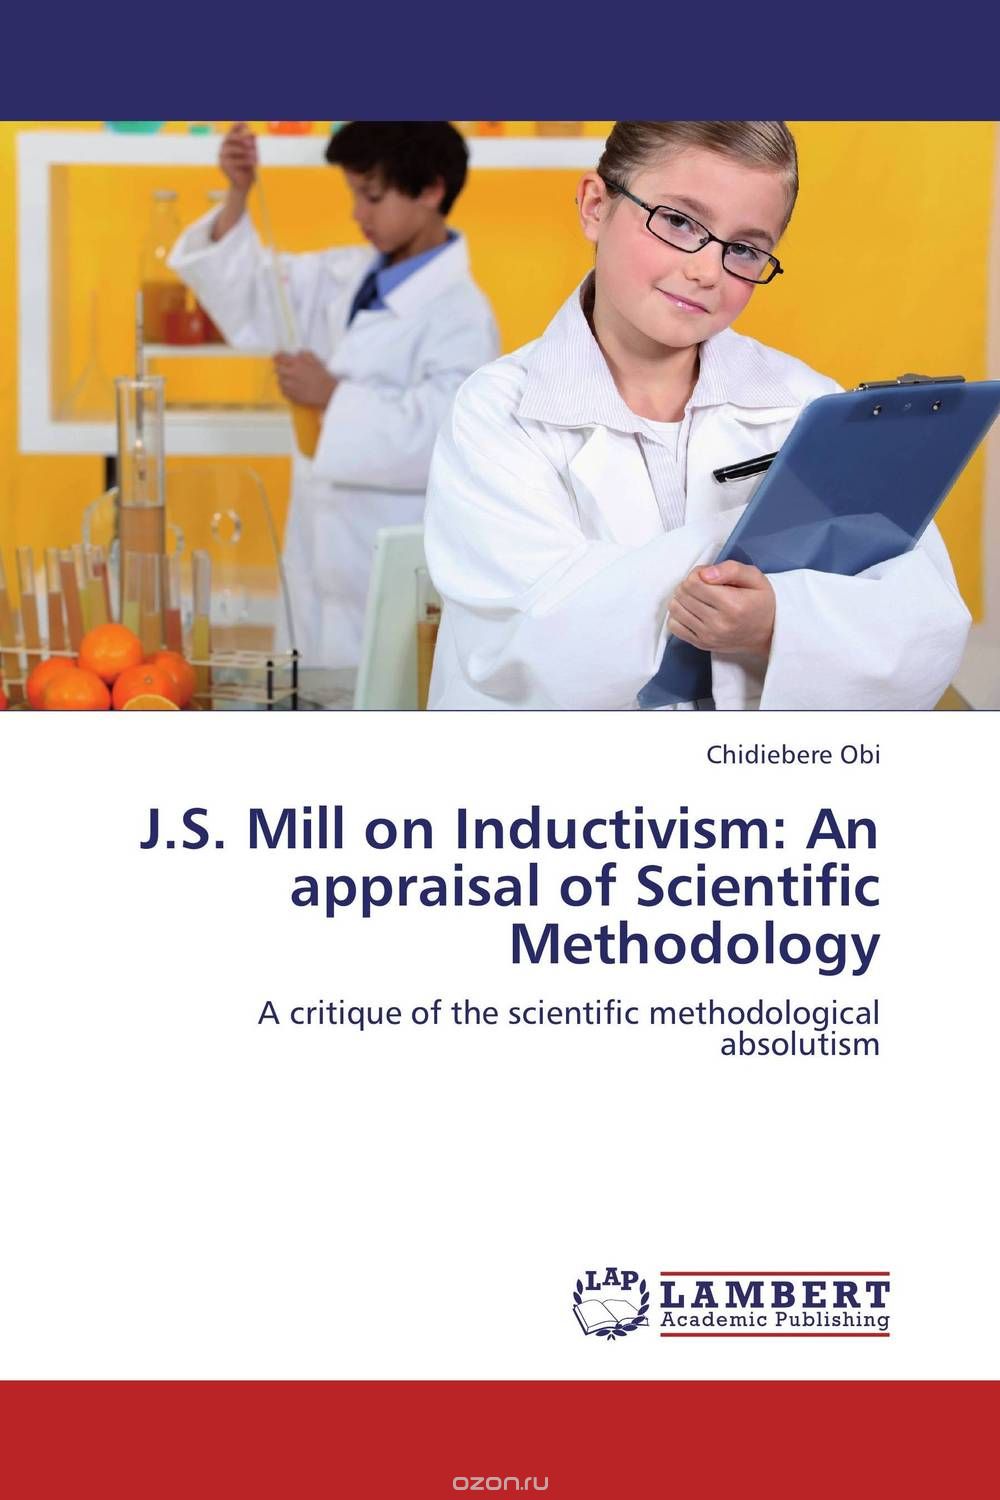 Скачать книгу "J.S. Mill on Inductivism: An appraisal of Scientific Methodology"